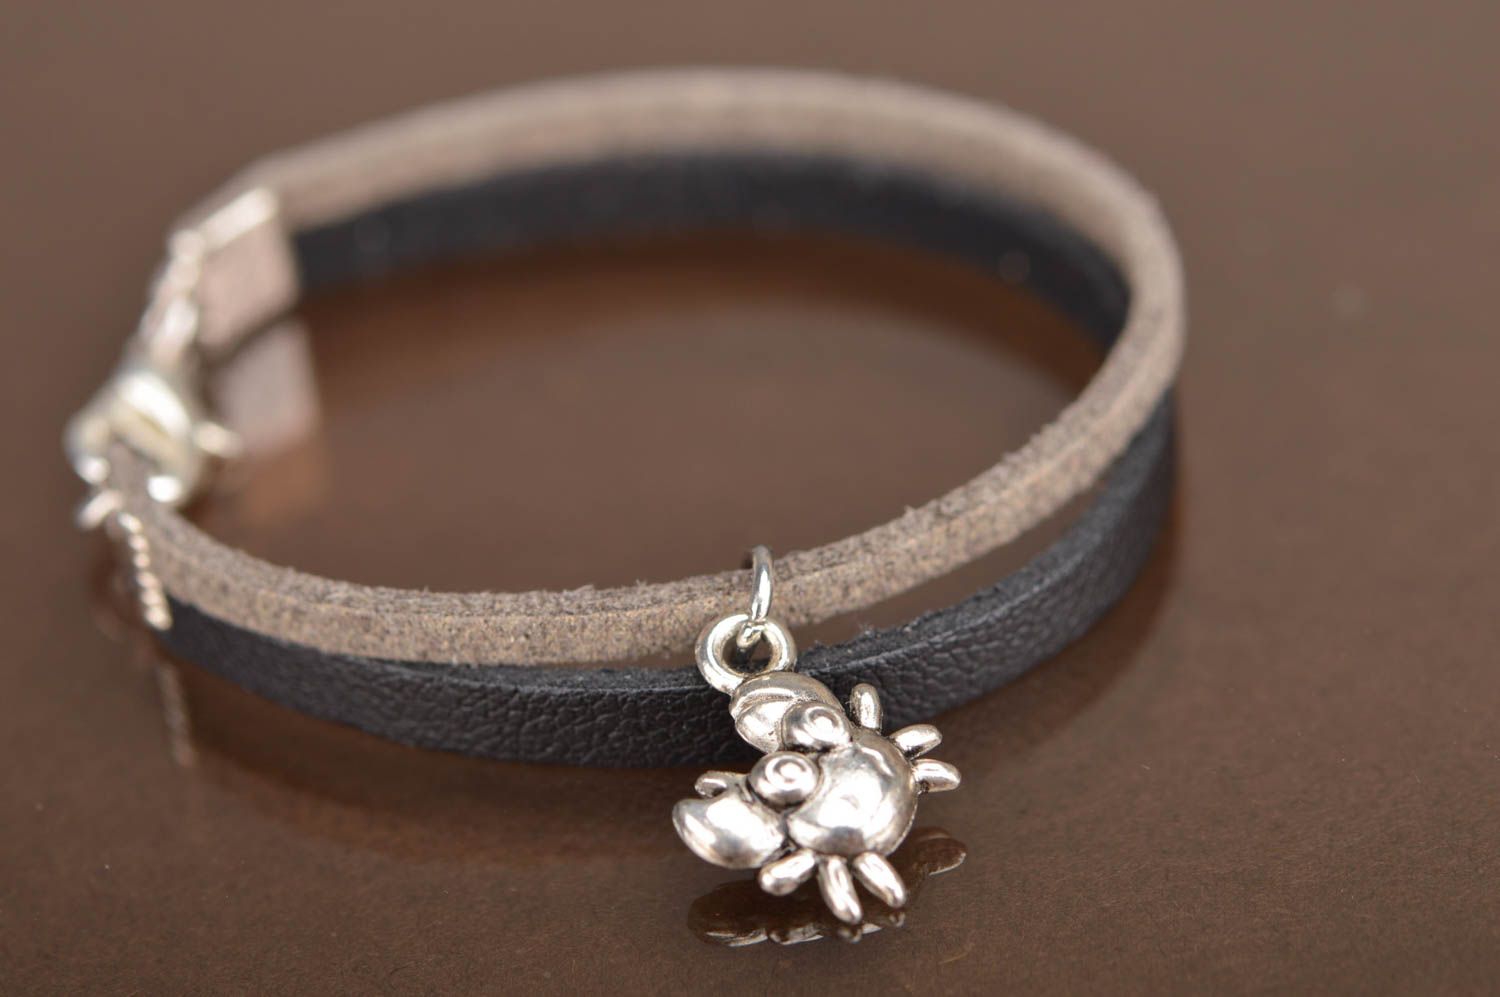 Handmade designer genuine leather cord bracelet black and beige with metal charm photo 2